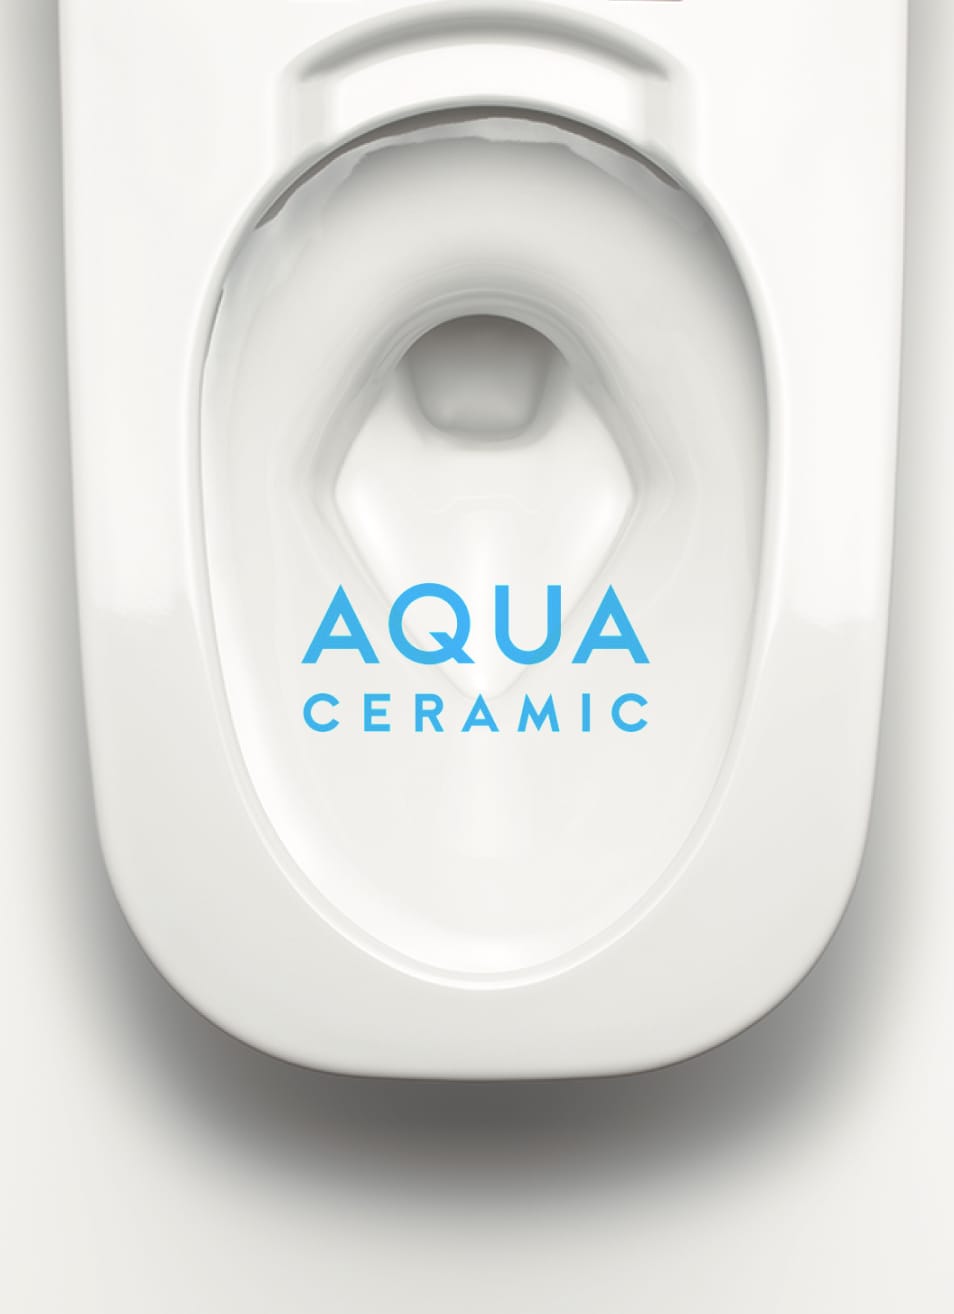 AQUA CERAMIC - The most advanced hygiene technology. Winner of Good Design Gold Award.